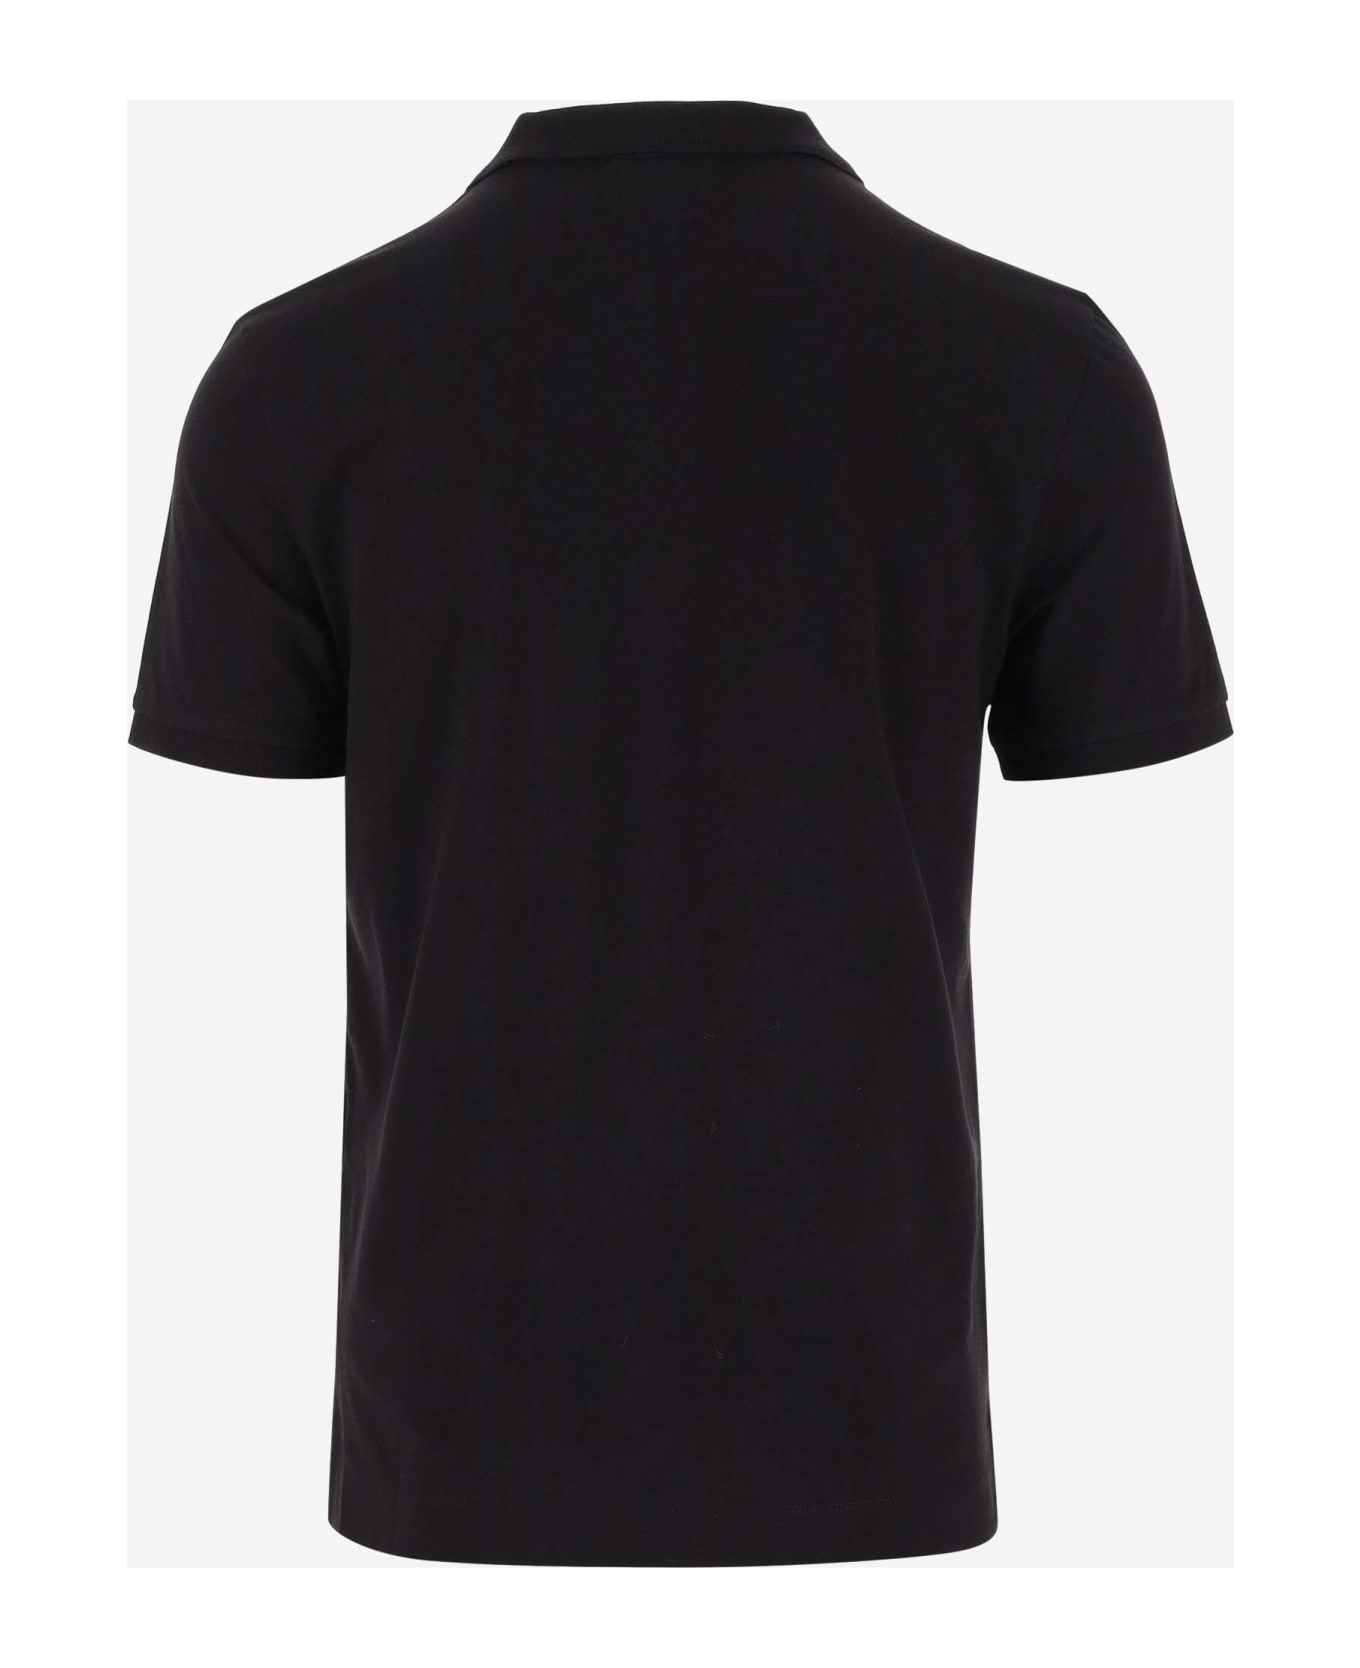 C.P. Company Cotton Blend Polo Shirt With Logo - Black